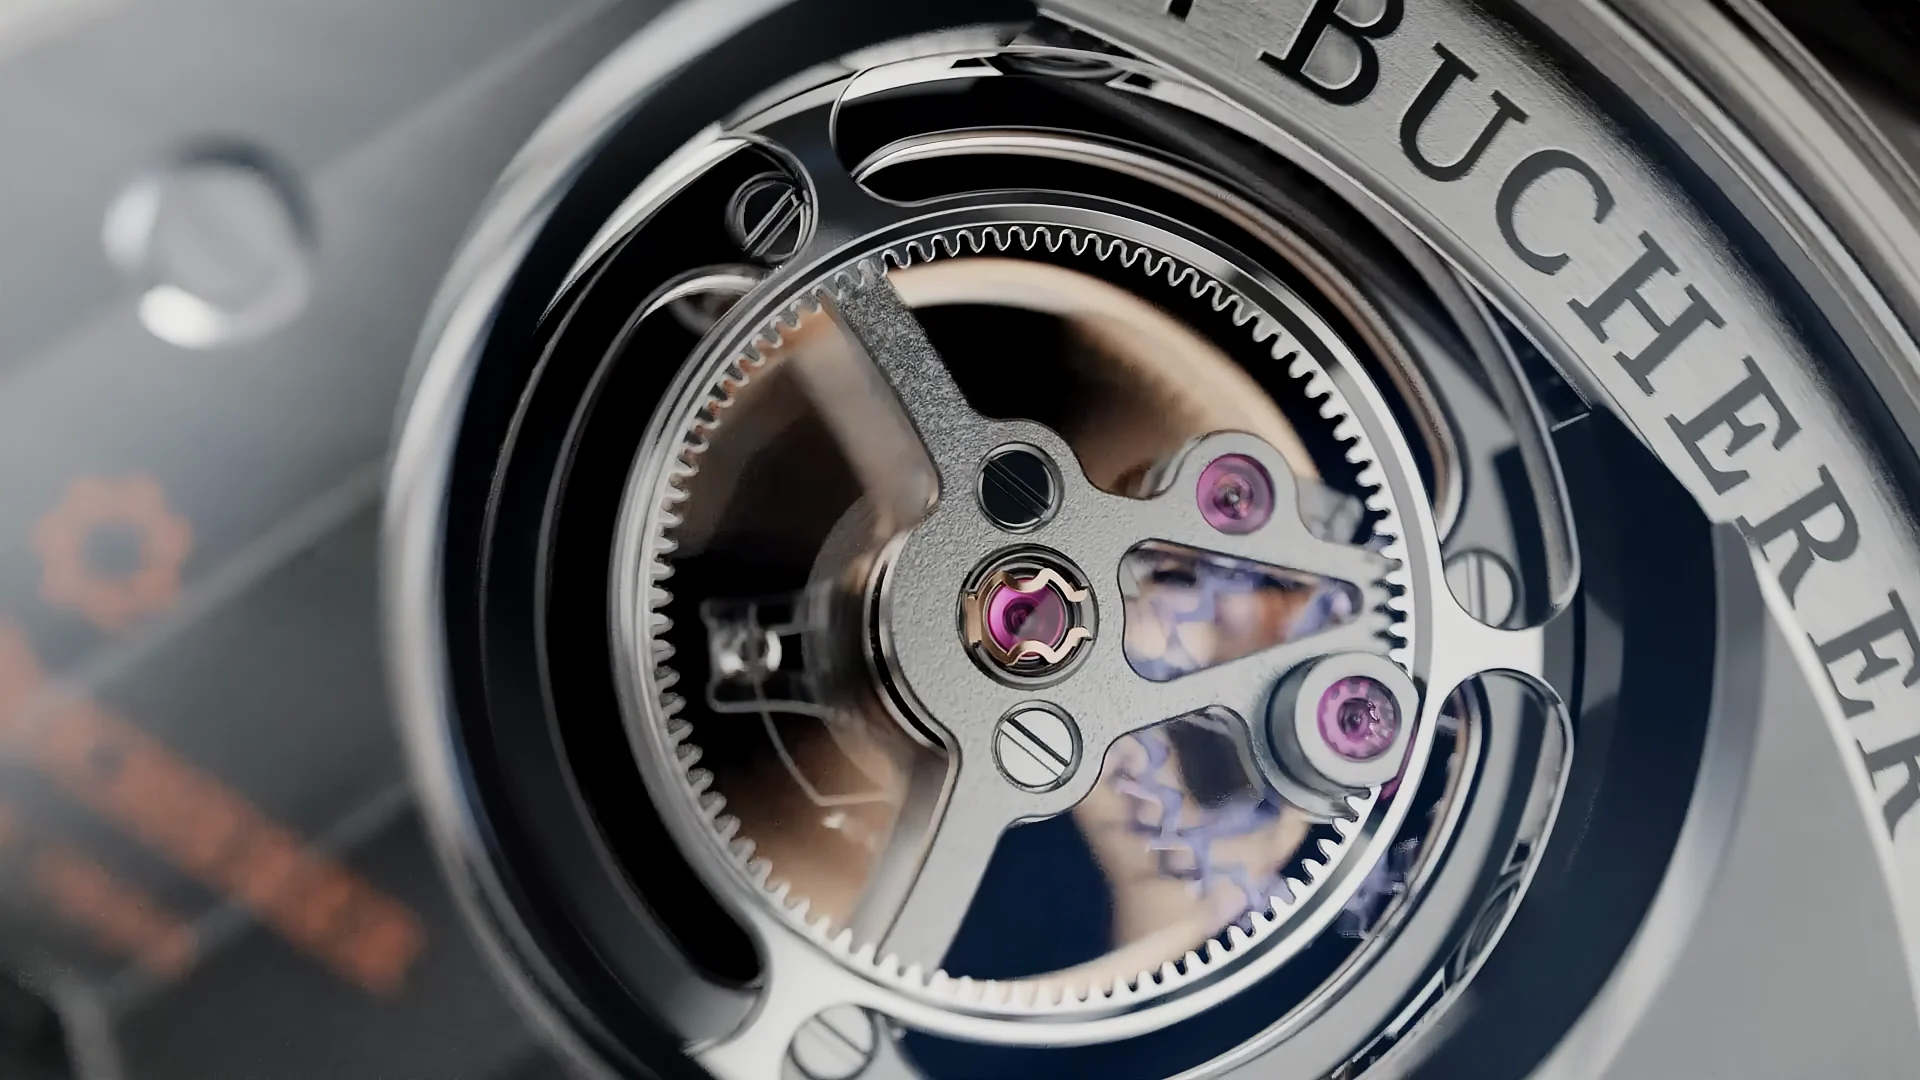 we seea close up of the turbillon of a Carl F Bucherer watch